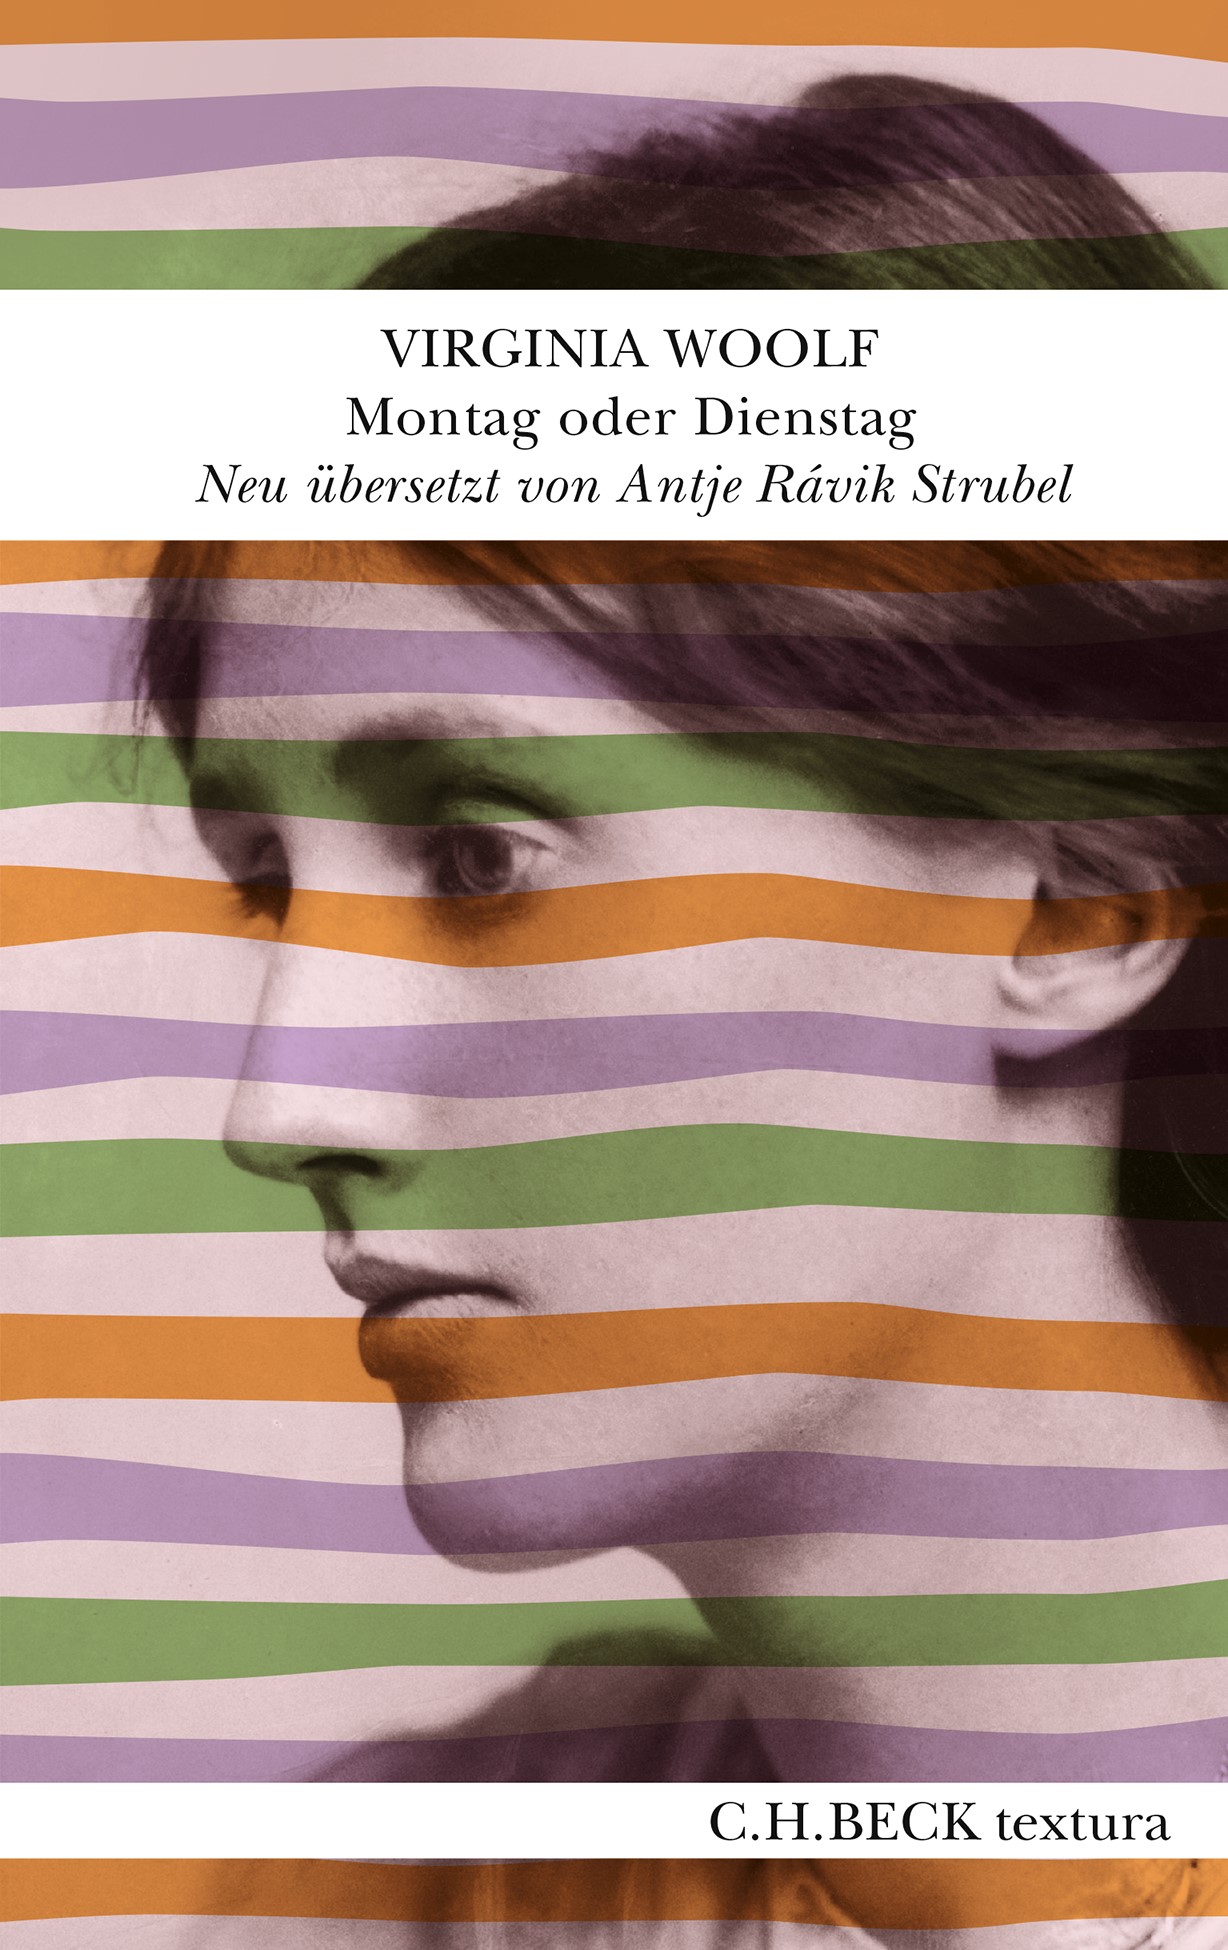 Virginia Woolf, Montag oder Dienstag